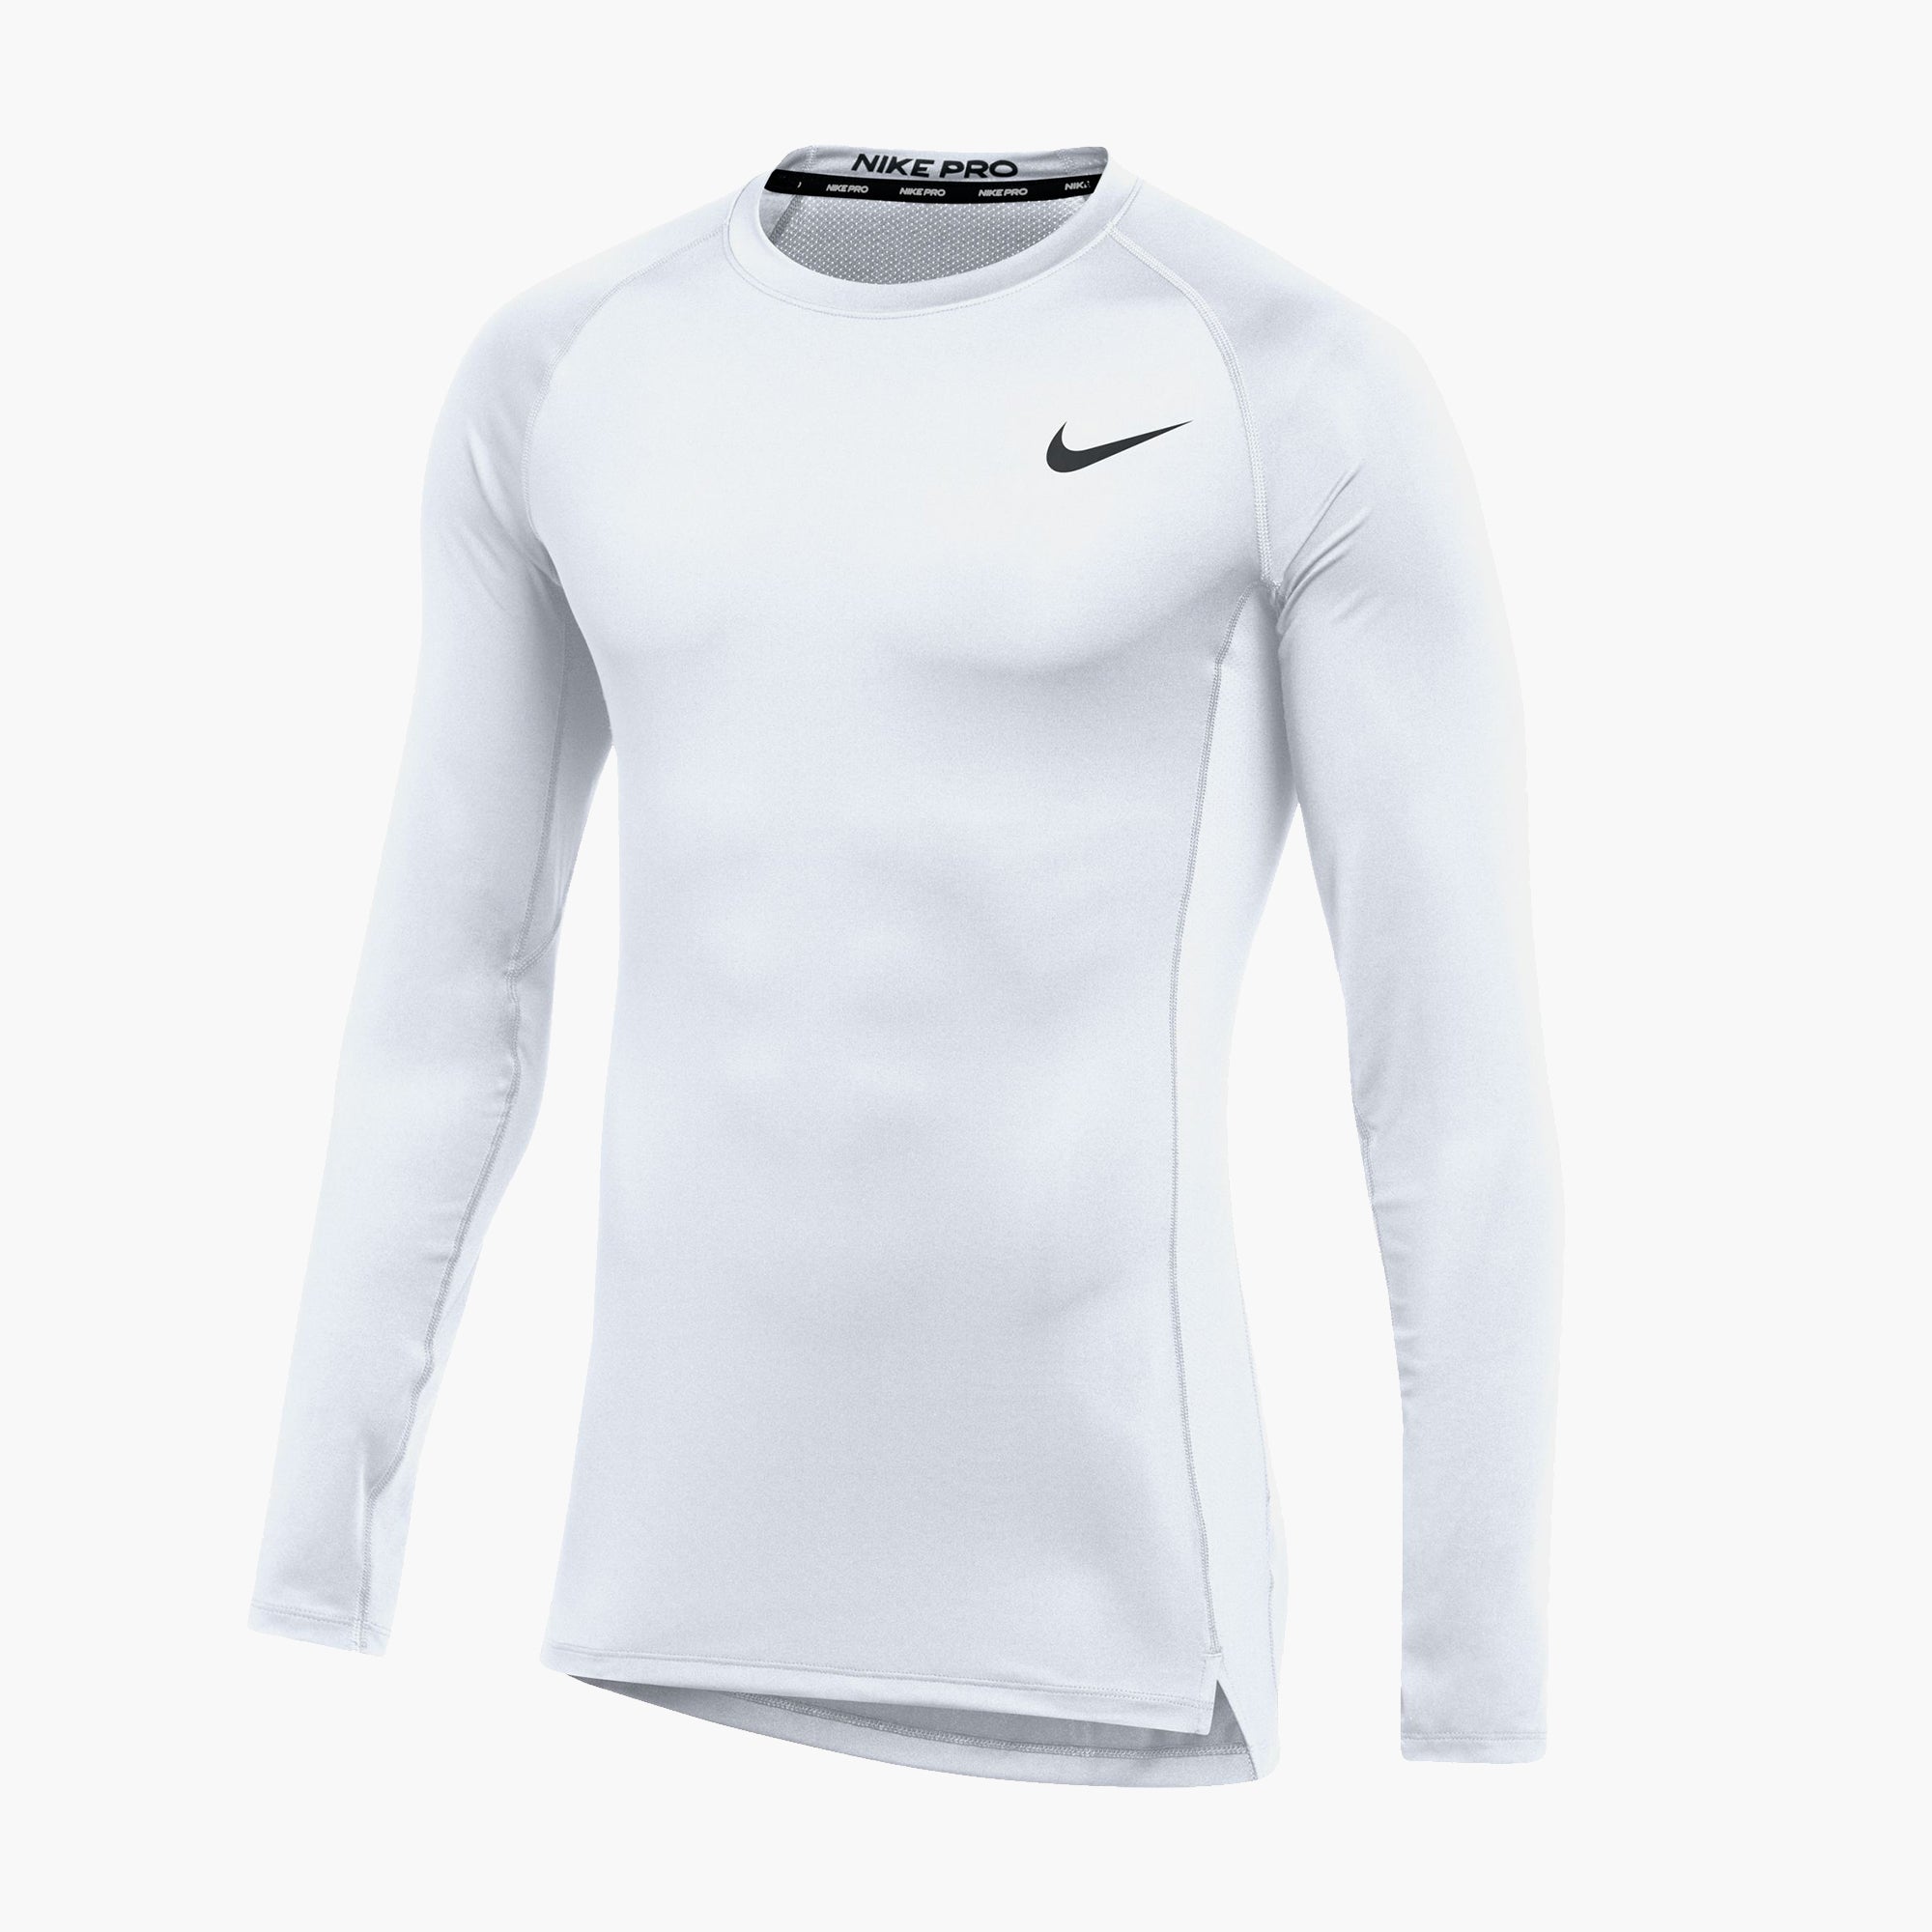 Nike Pro Compression Long Sleeve Men's Short White